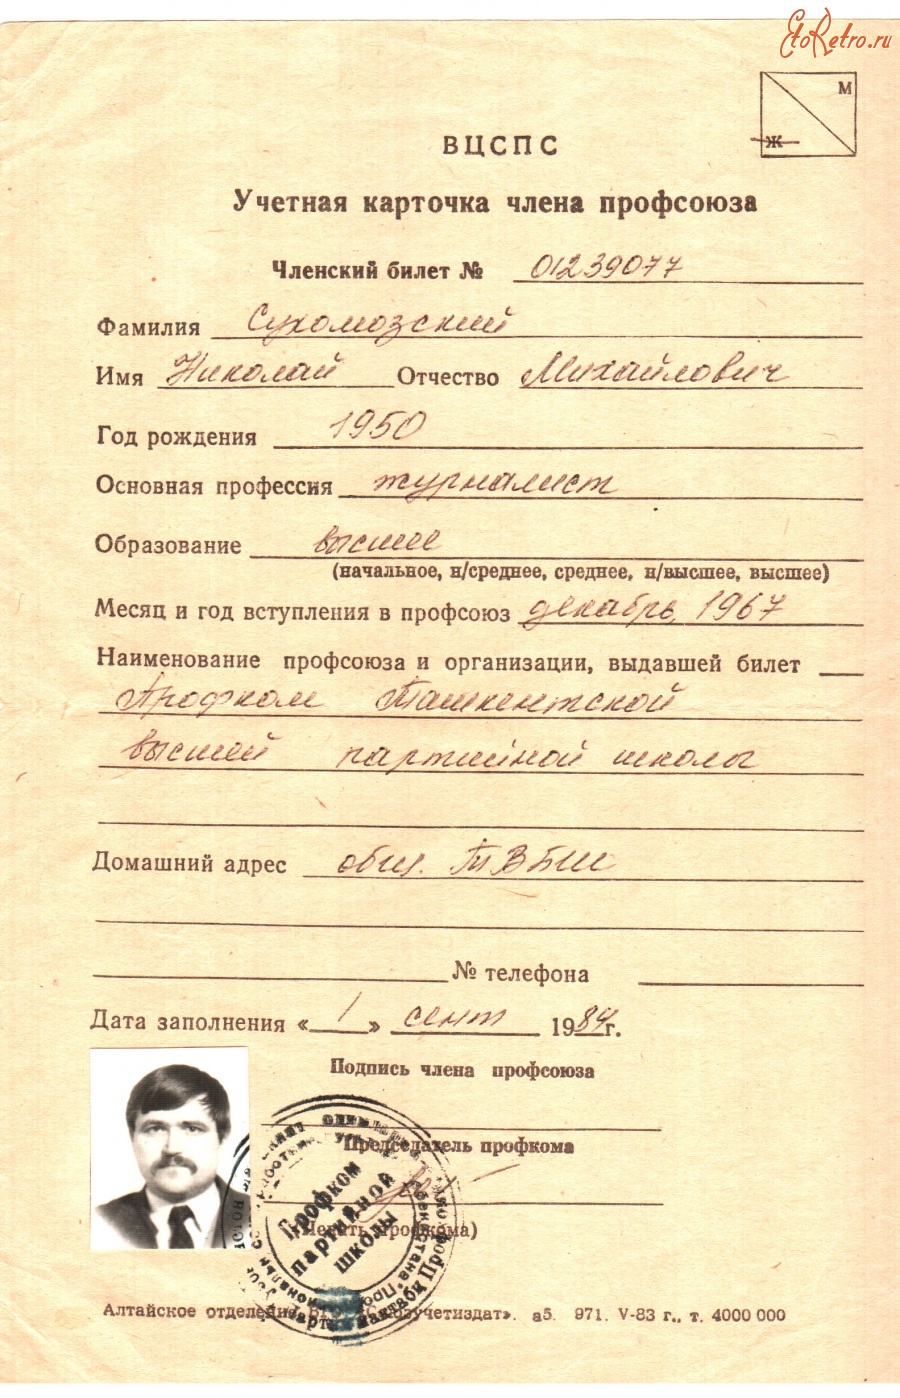 Ташкент - Учетная карточка члена профсоюза